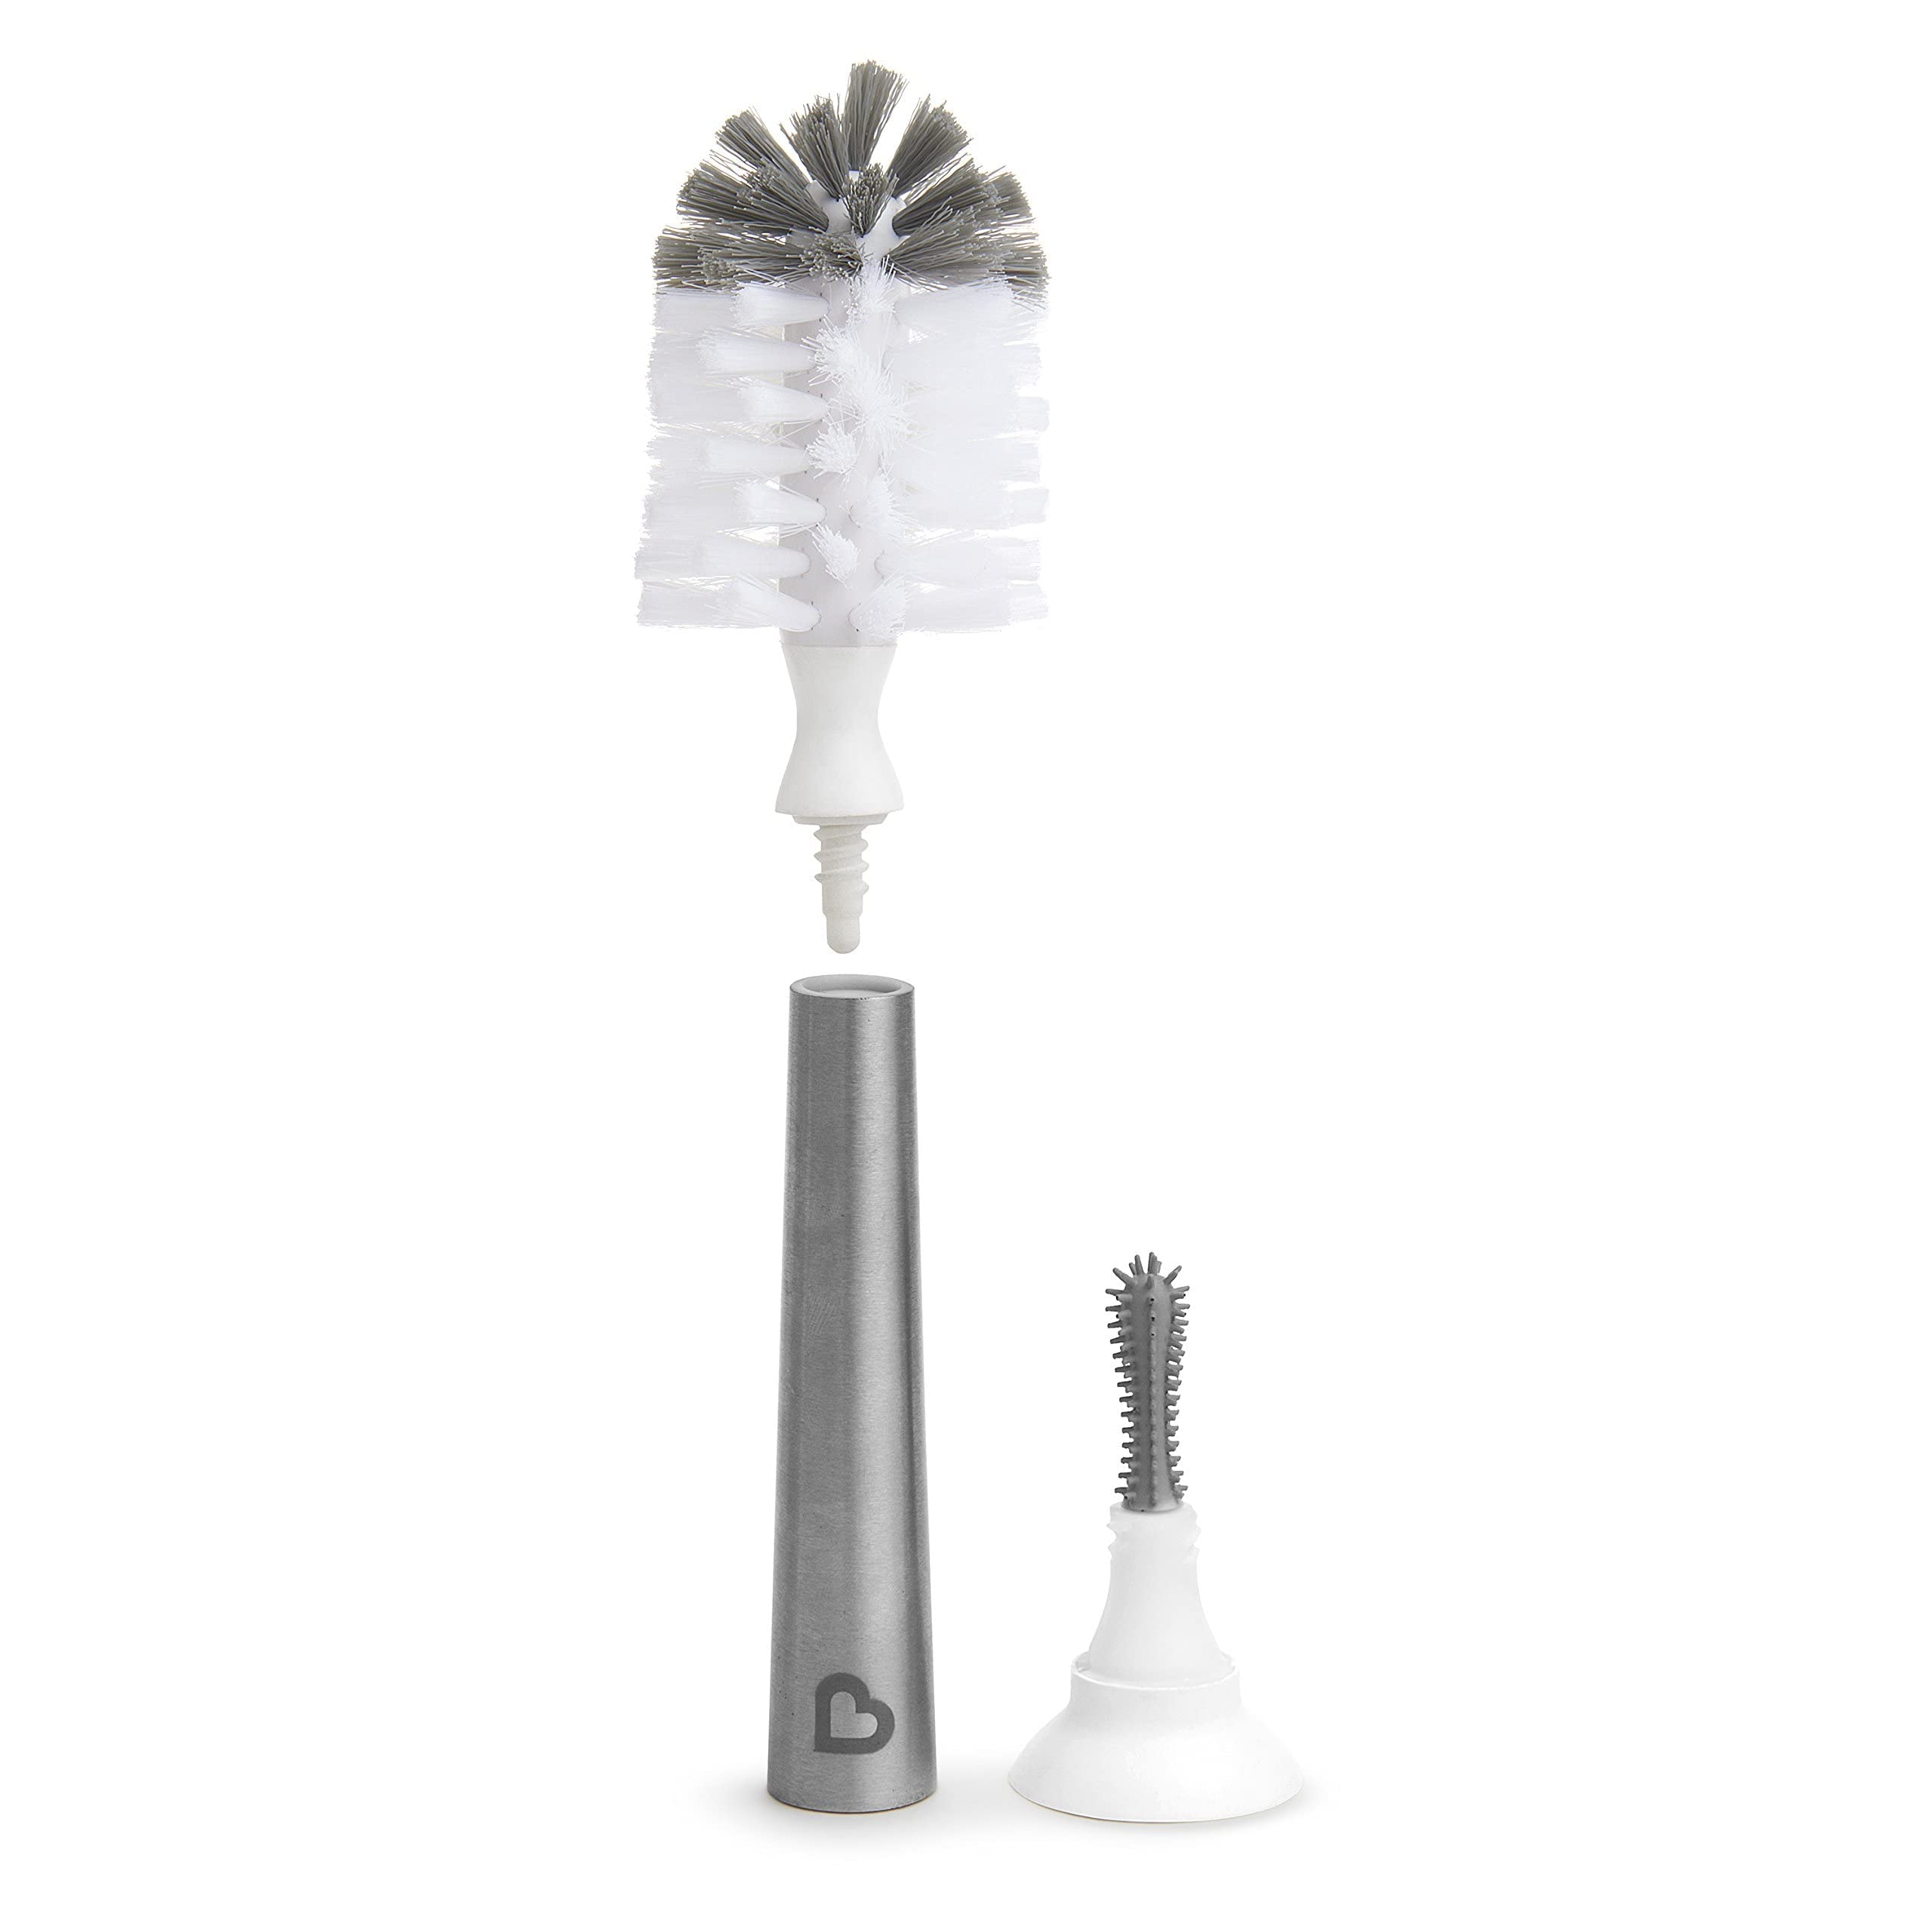 Munchkin® Shine™ Stainless Steel Bottle Brush and Refill Brush Head